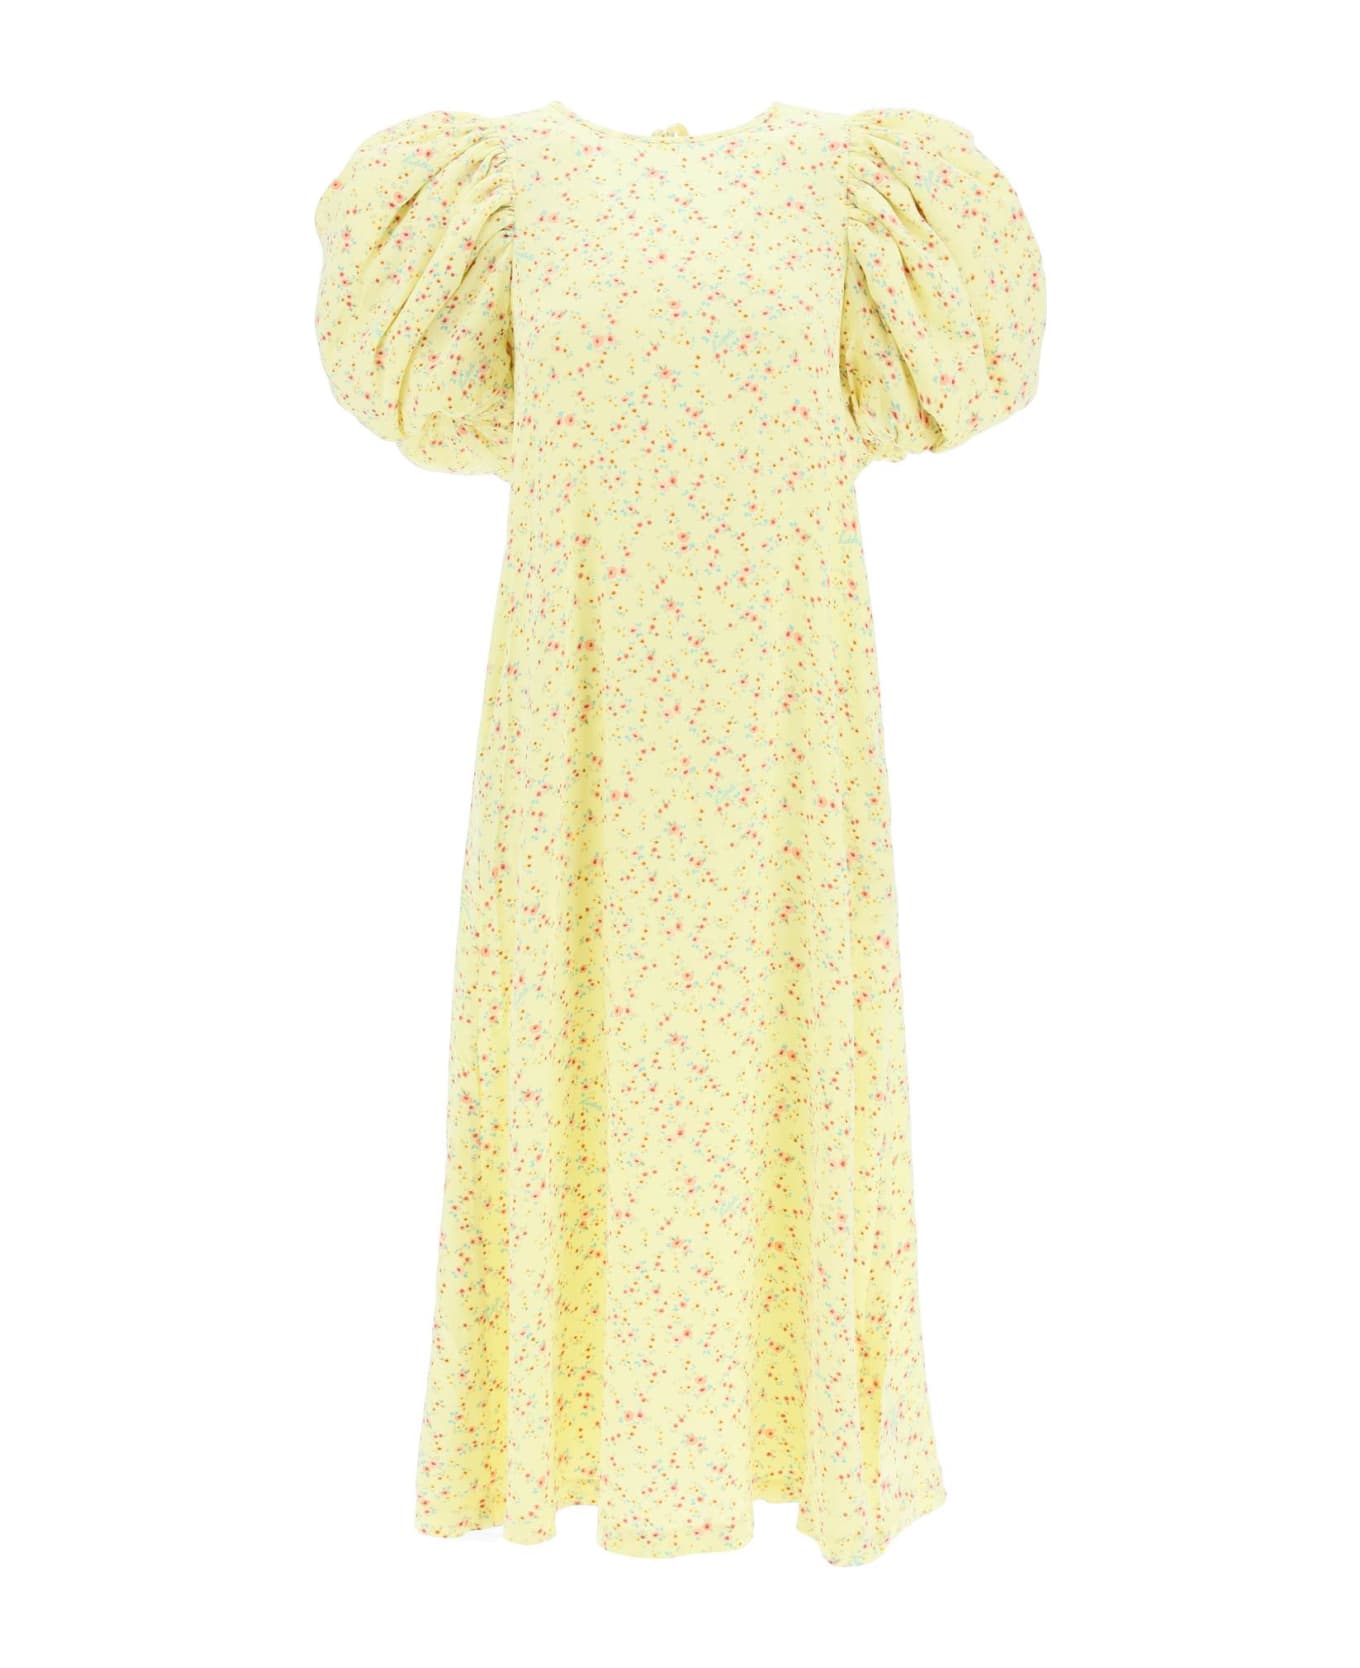 Rotate by Birger Christensen 'duddy' Jacquard Dress - YELLOW PEAR (Yellow)